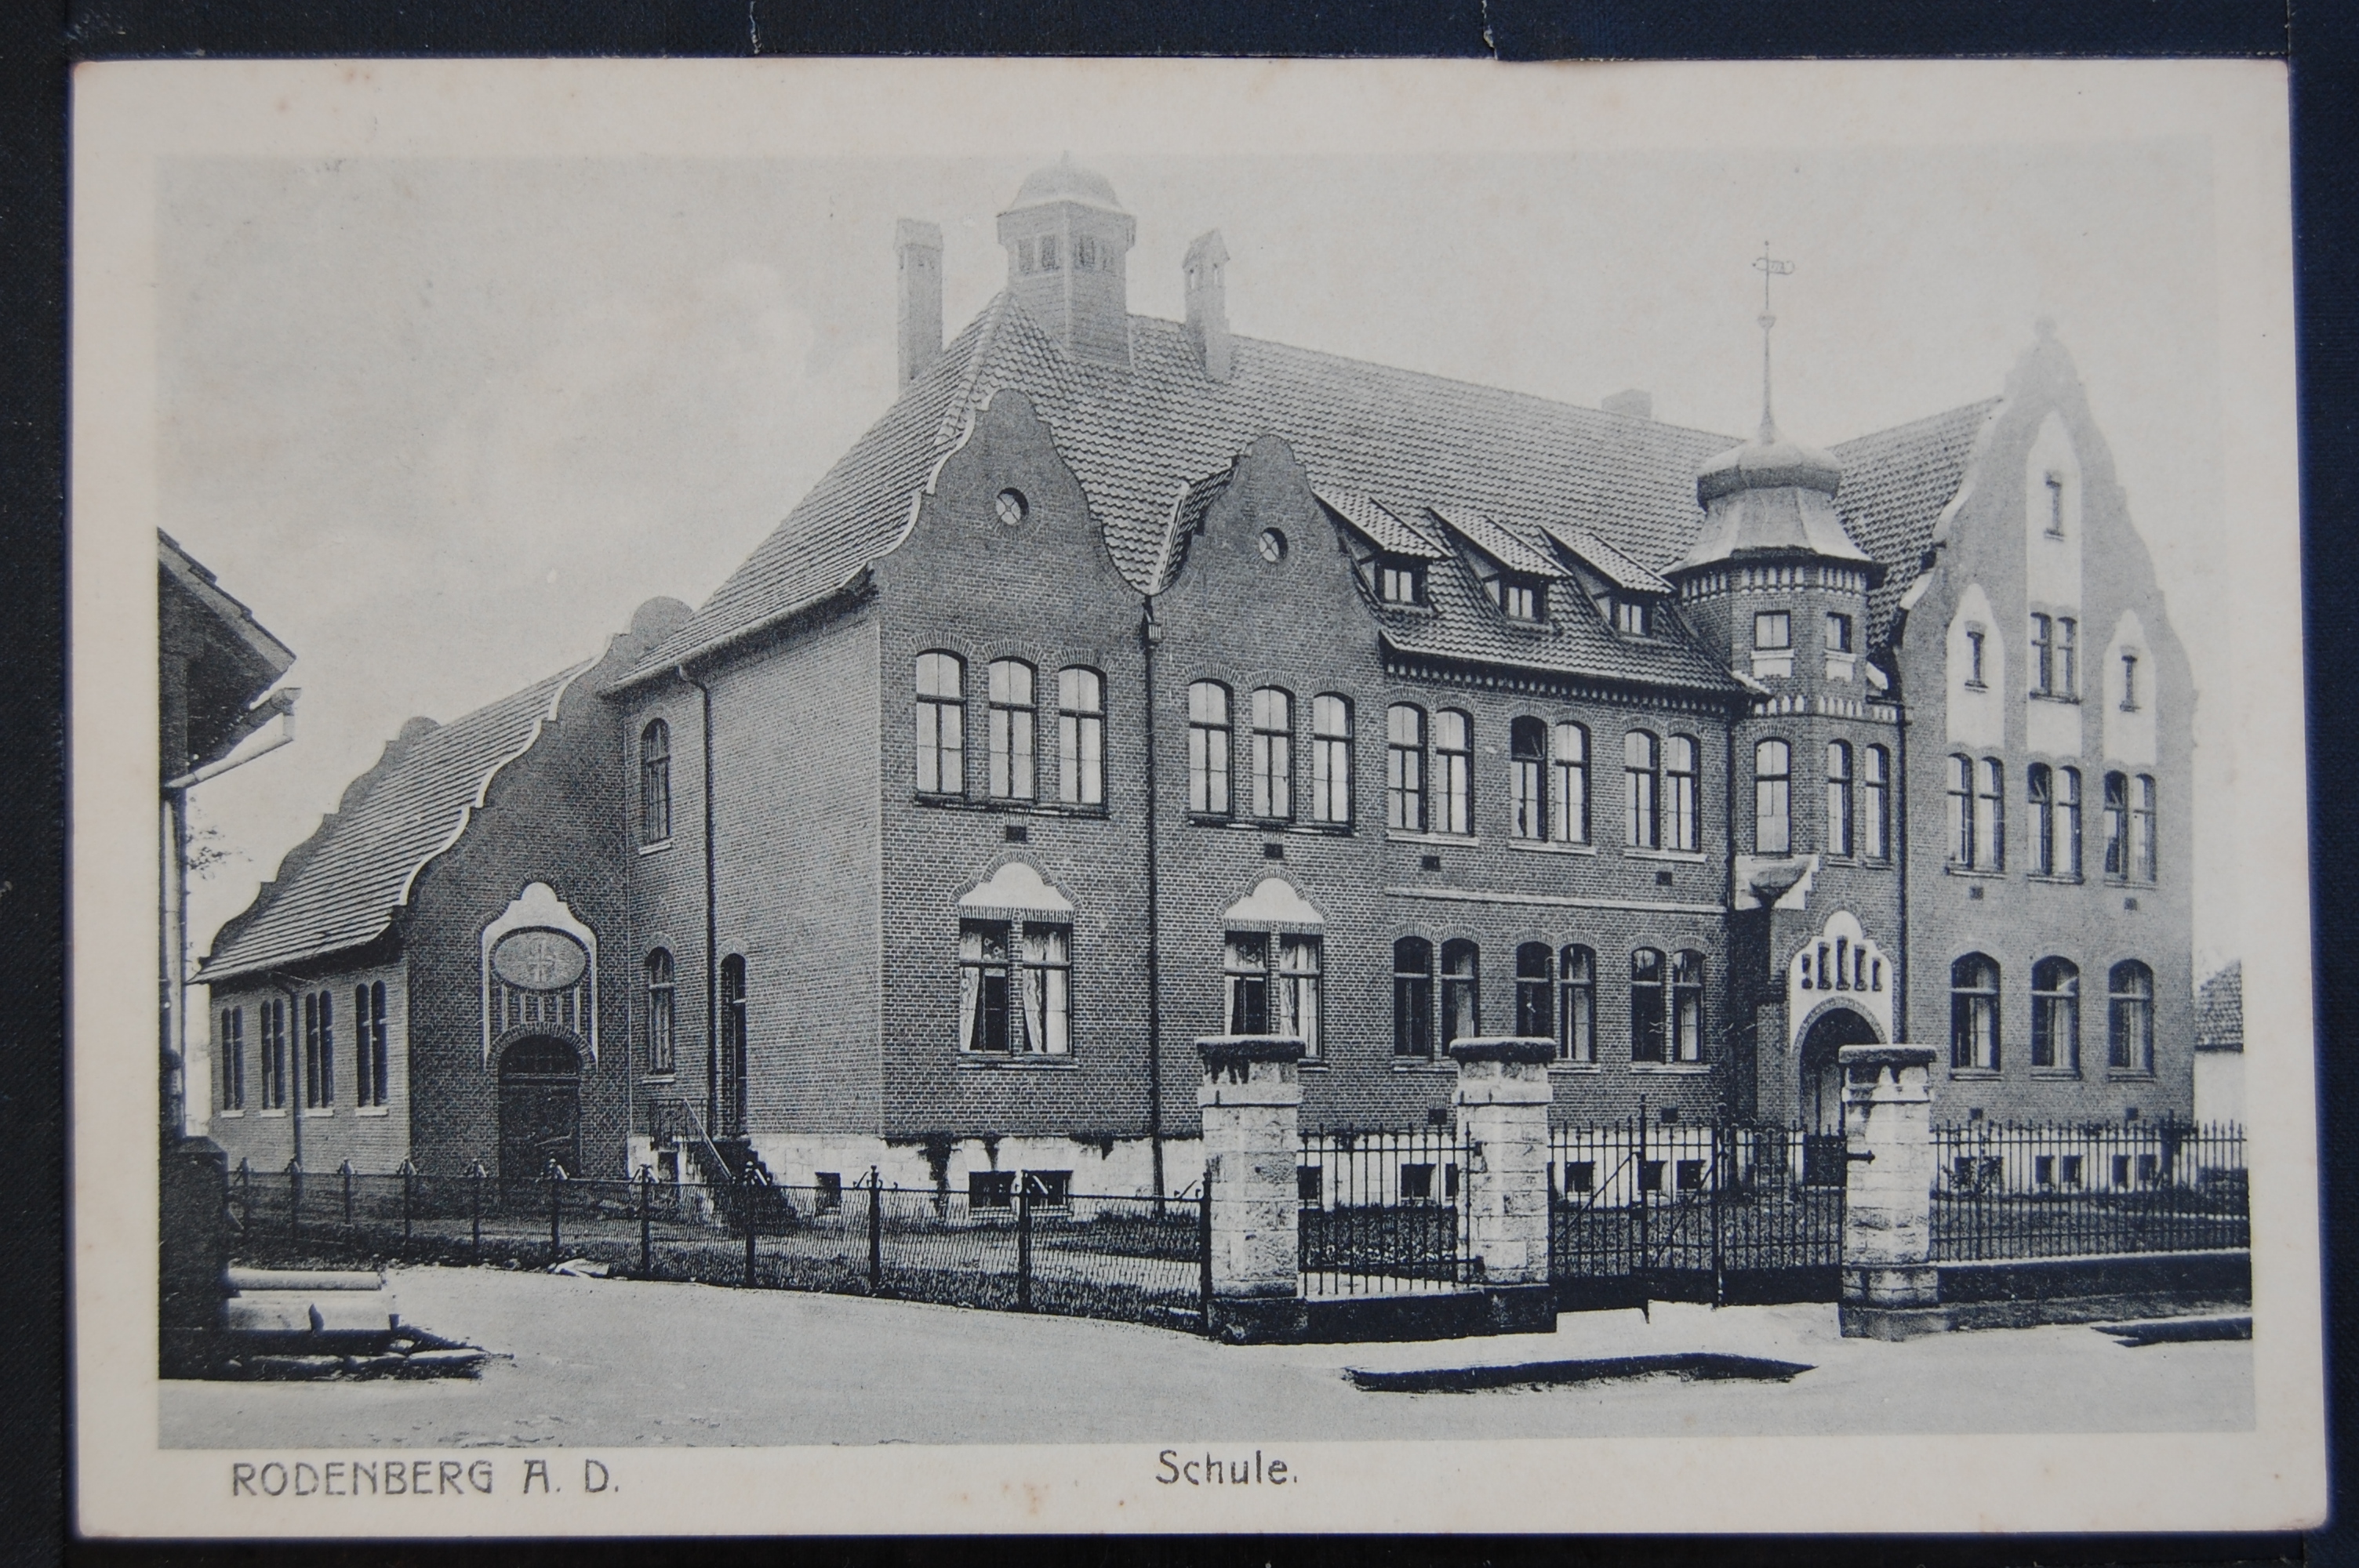 Ansichtskarte, Aufdruck "RODENBERG Schule" in der Langen Straße 1915 (Museumslandschaft Amt Rodenberg e.V. CC BY-NC-SA)